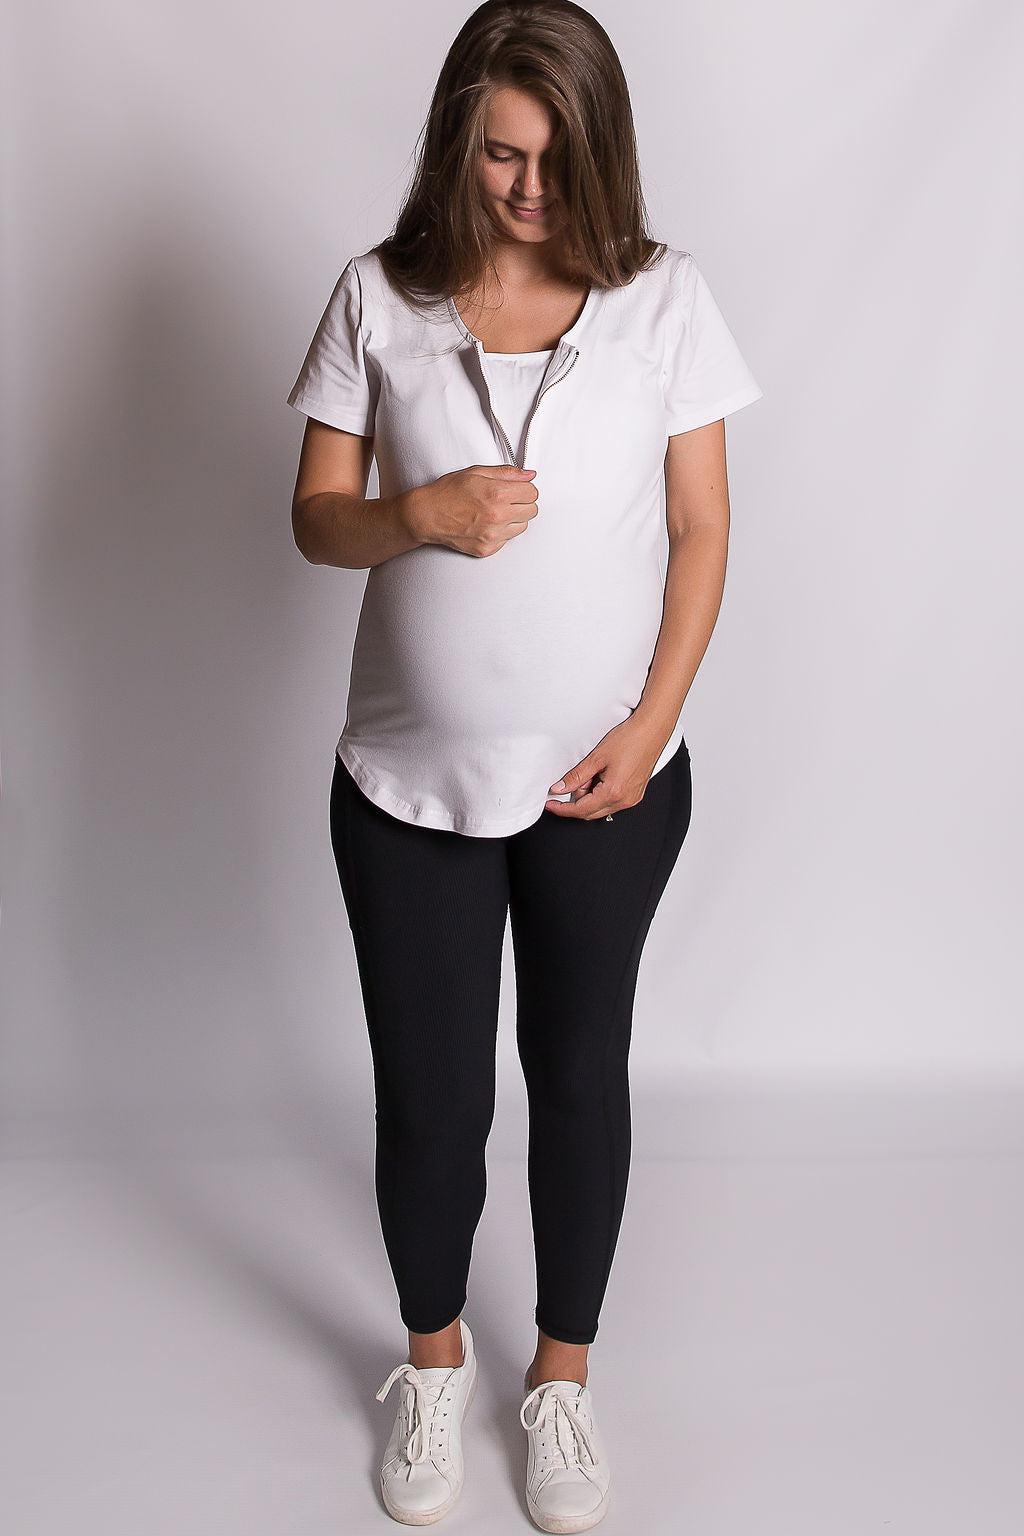 Rose Gold Zipper Tee - White-Breastfeeding t-shirt NZ, Maternity t-shirt NZ, Flourish Maternity